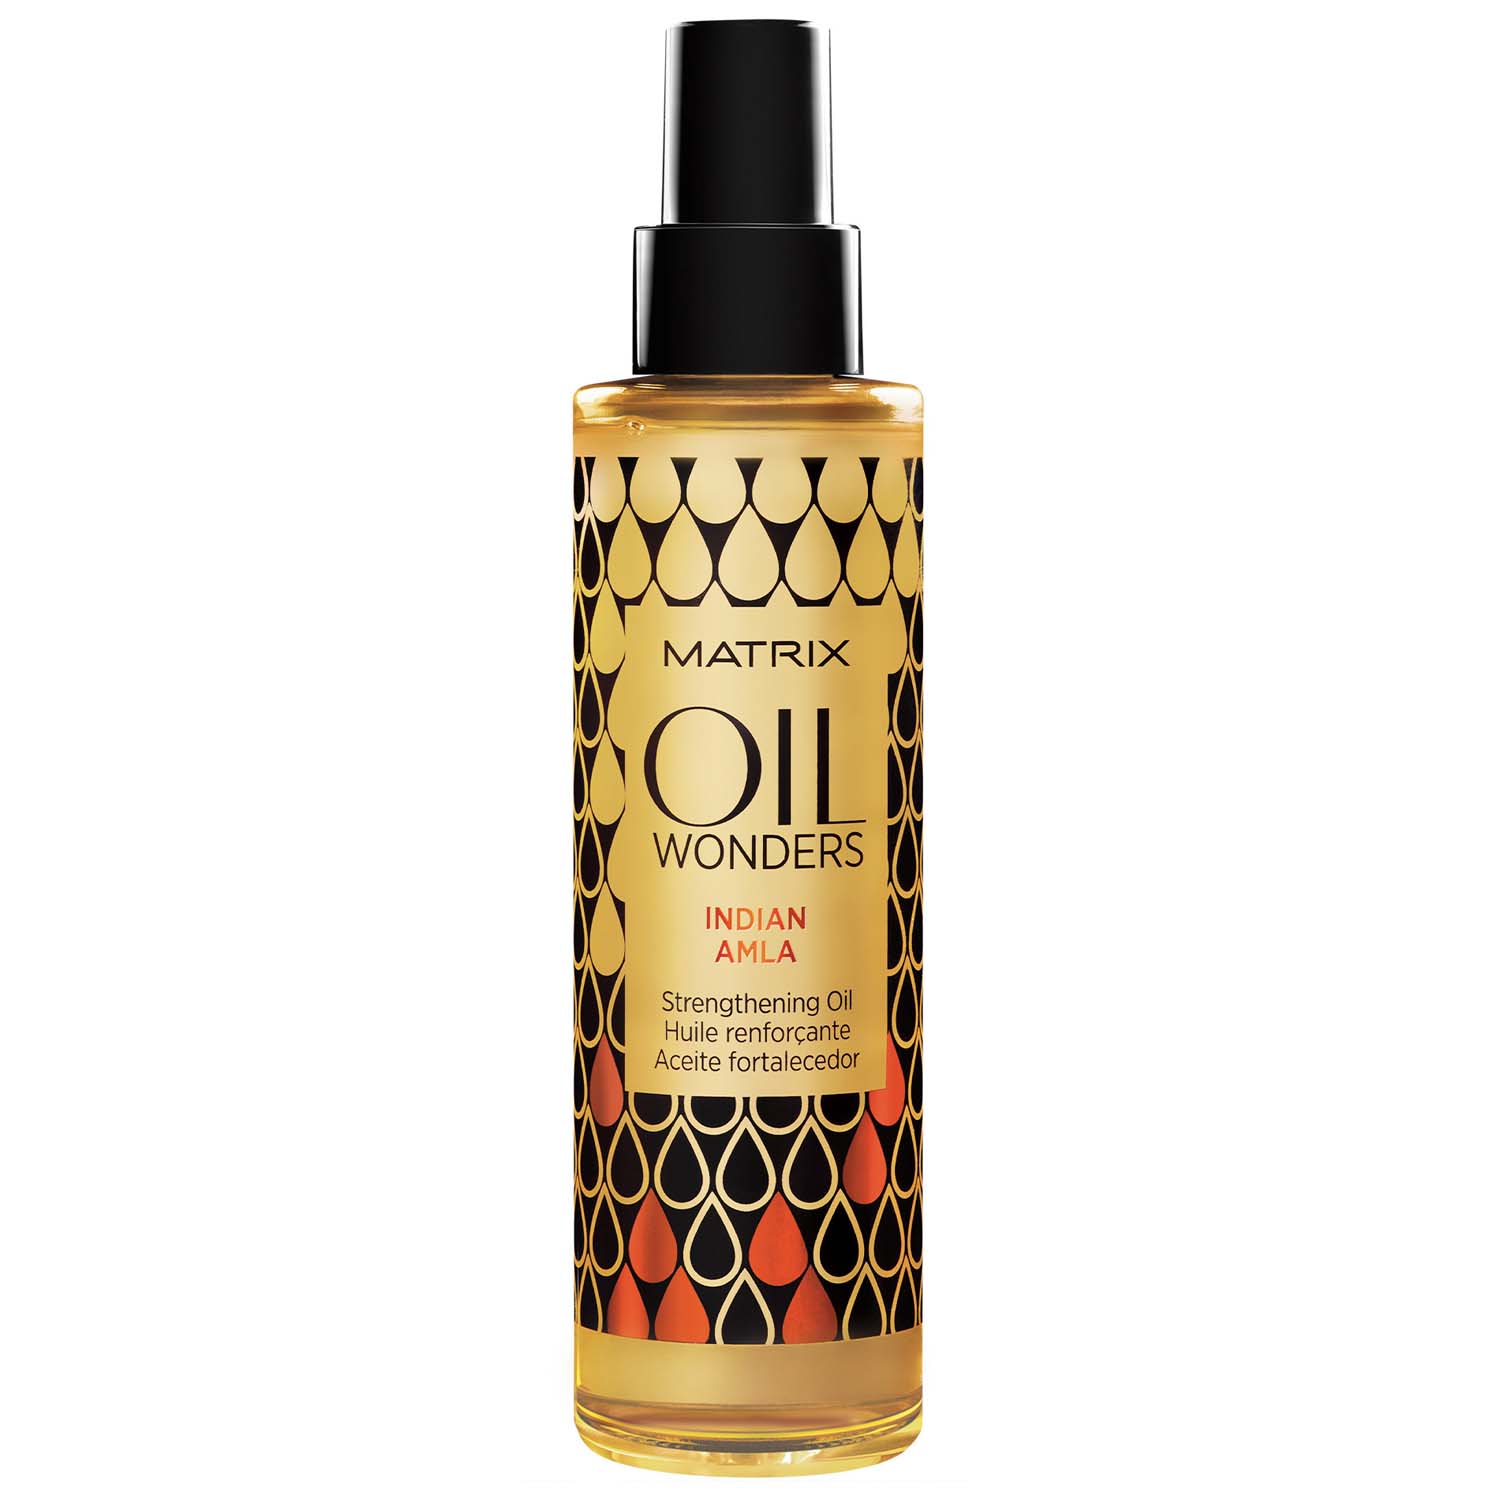 morrocan oil deluxe wonders Matrix Масло укрепляющее волосы «Индийская Амла», 150 мл (Matrix, Oil Wonders)